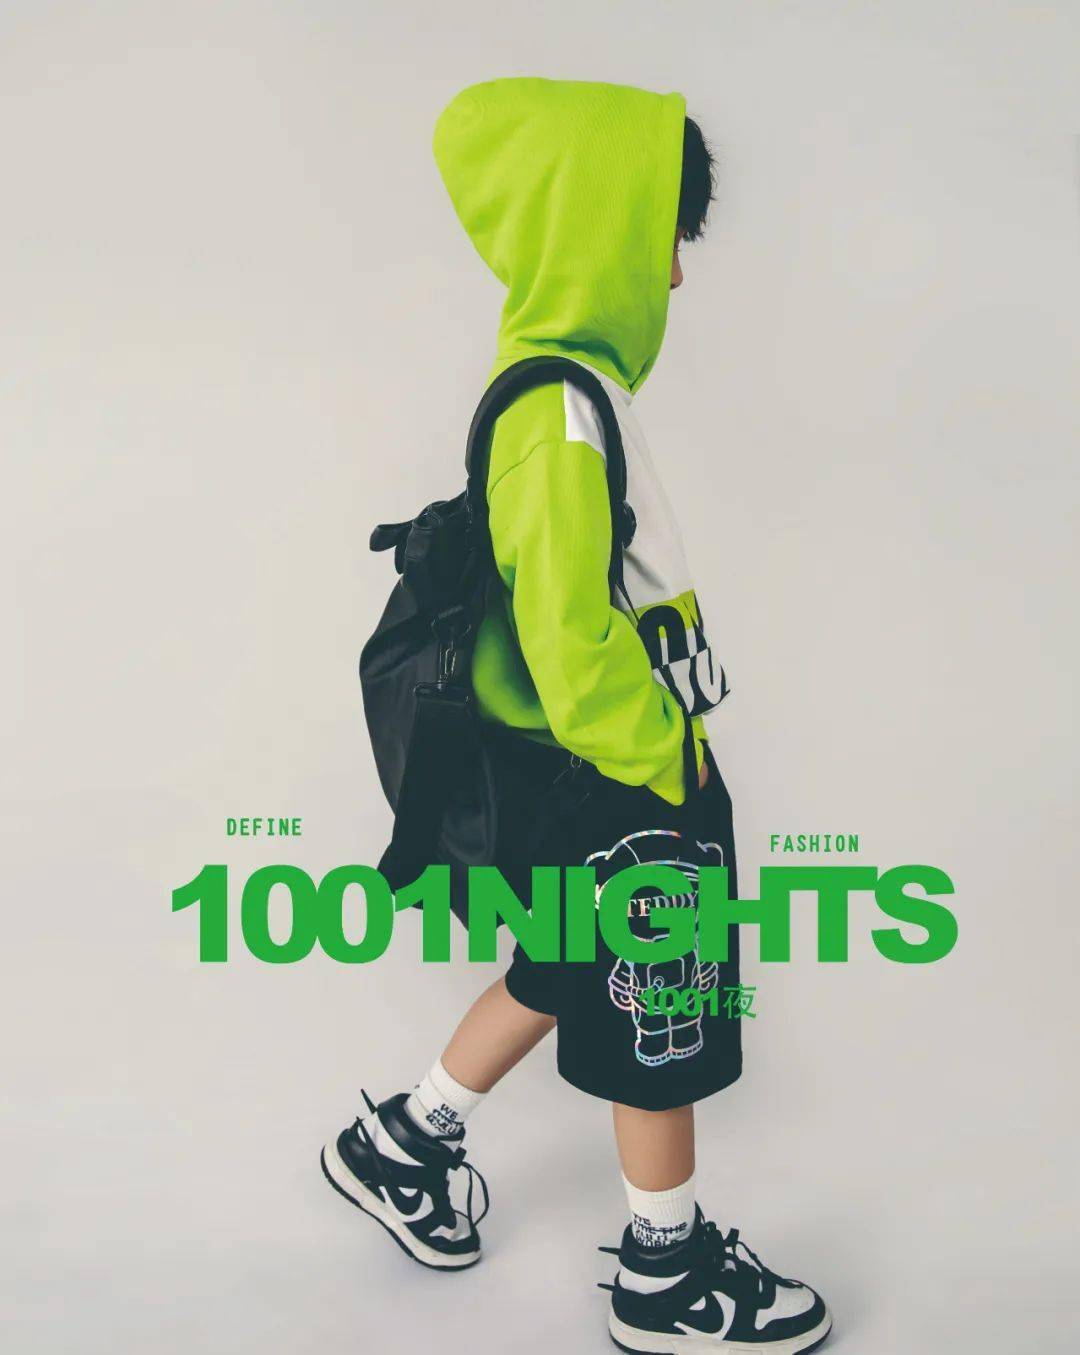 bsport体育中国十大童装品牌 1001夜童话童装：陪伴是最好的礼物(图5)